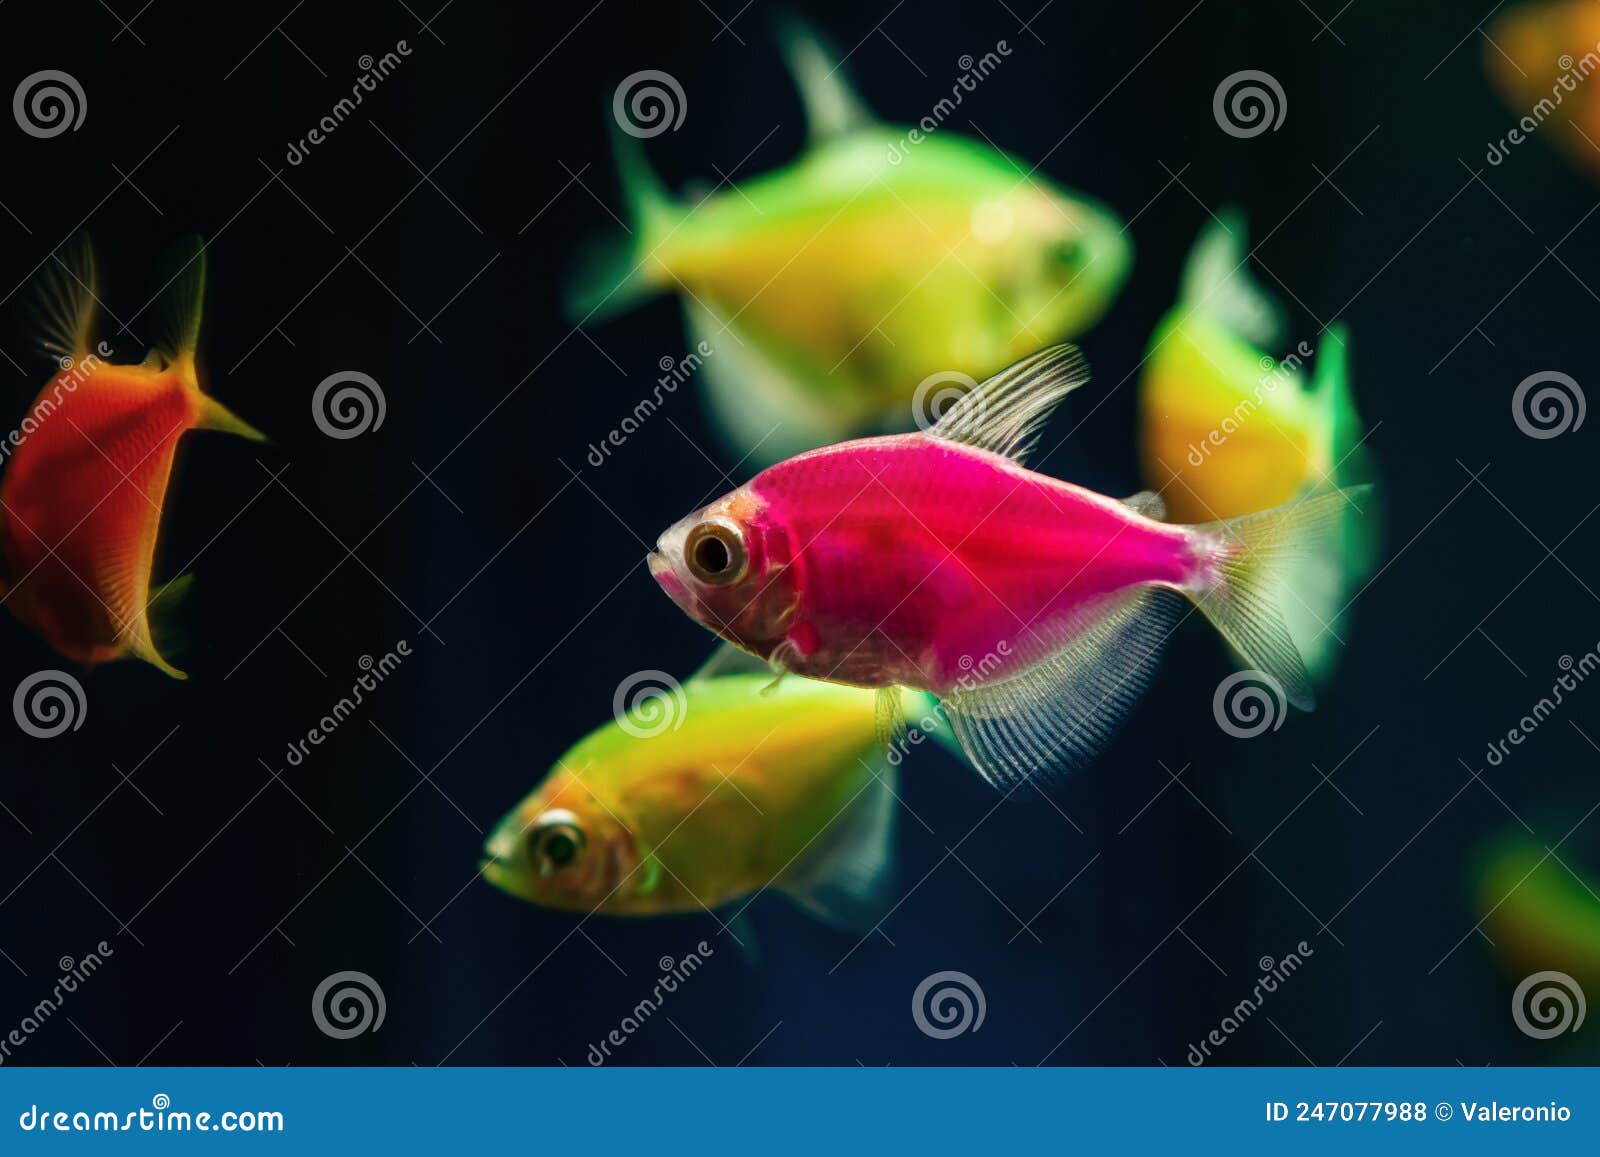 6,826 Pink Fish Aquarium Stock Photos - Free & Royalty-Free Stock Photos  from Dreamstime